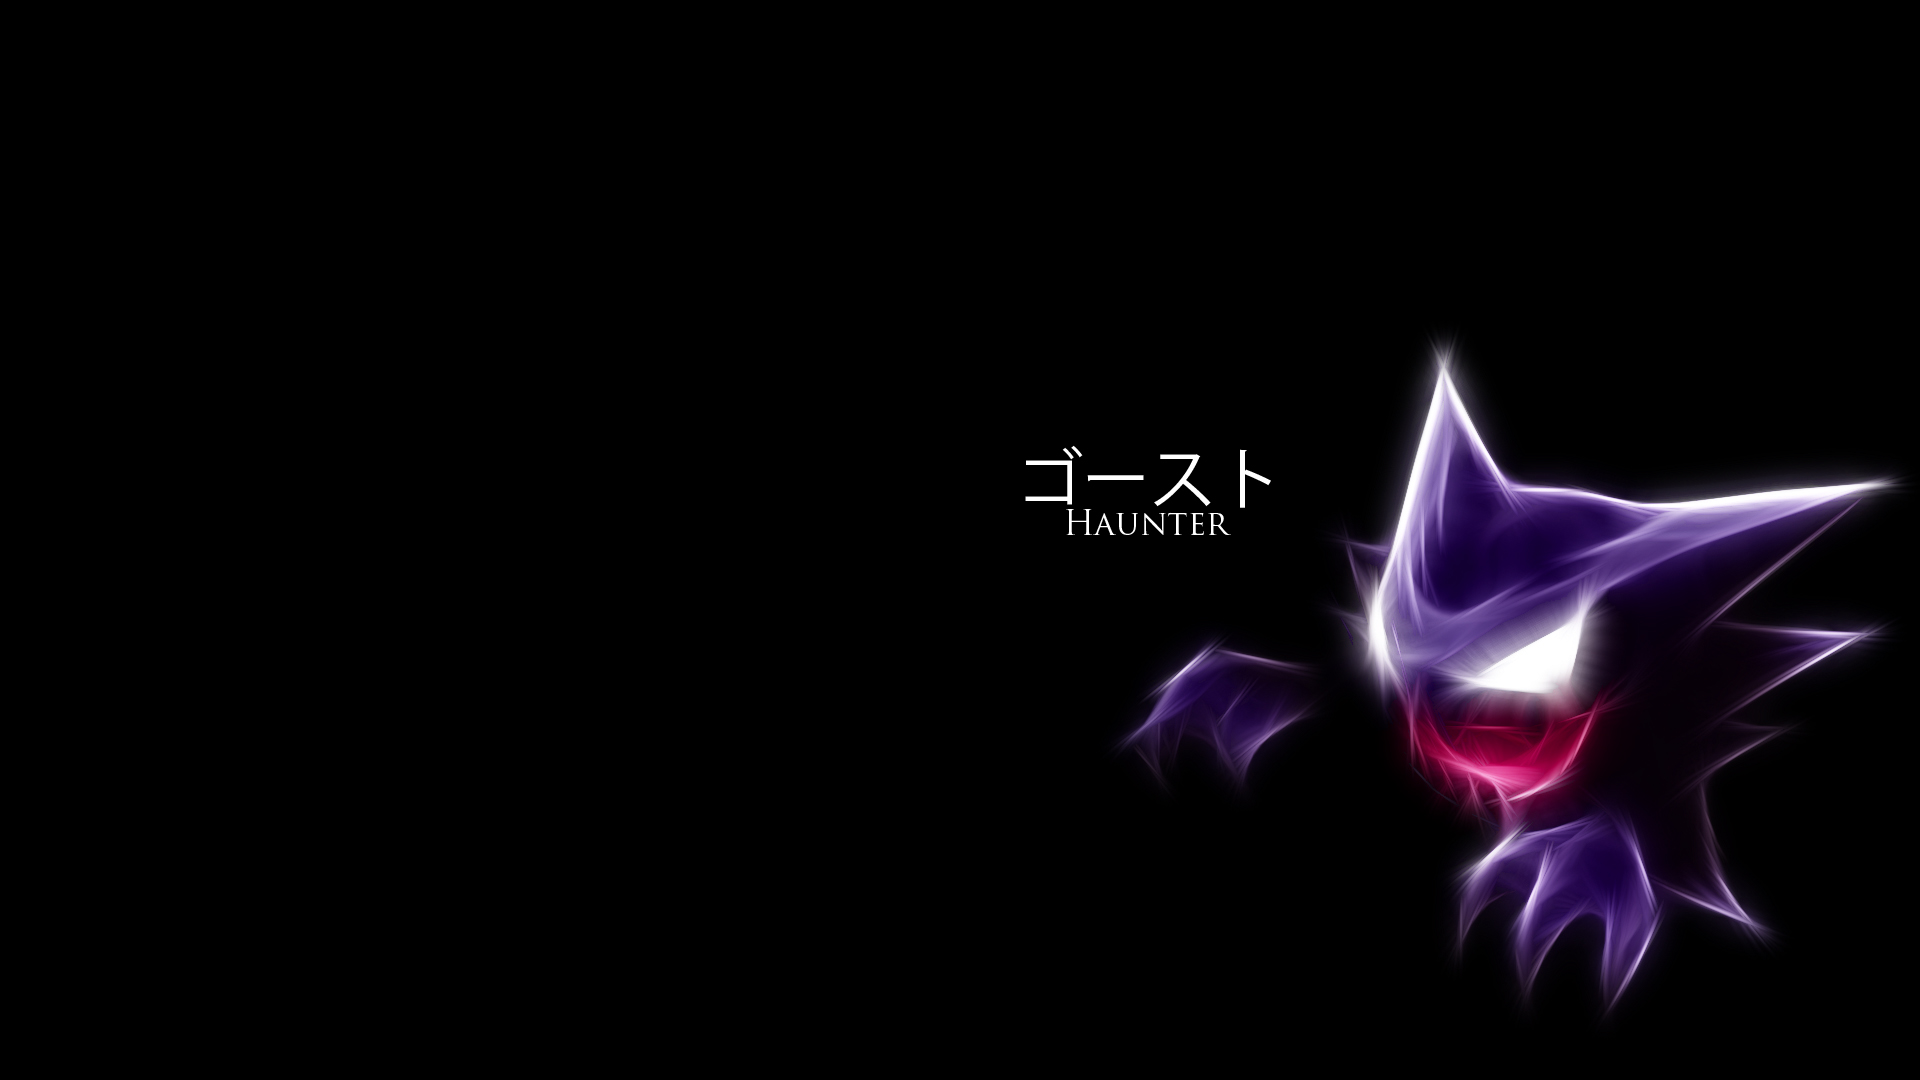 pokemon wallpaper 3D, violet, purple, black, graphic design, darkness, light, text, font, organism, illustration